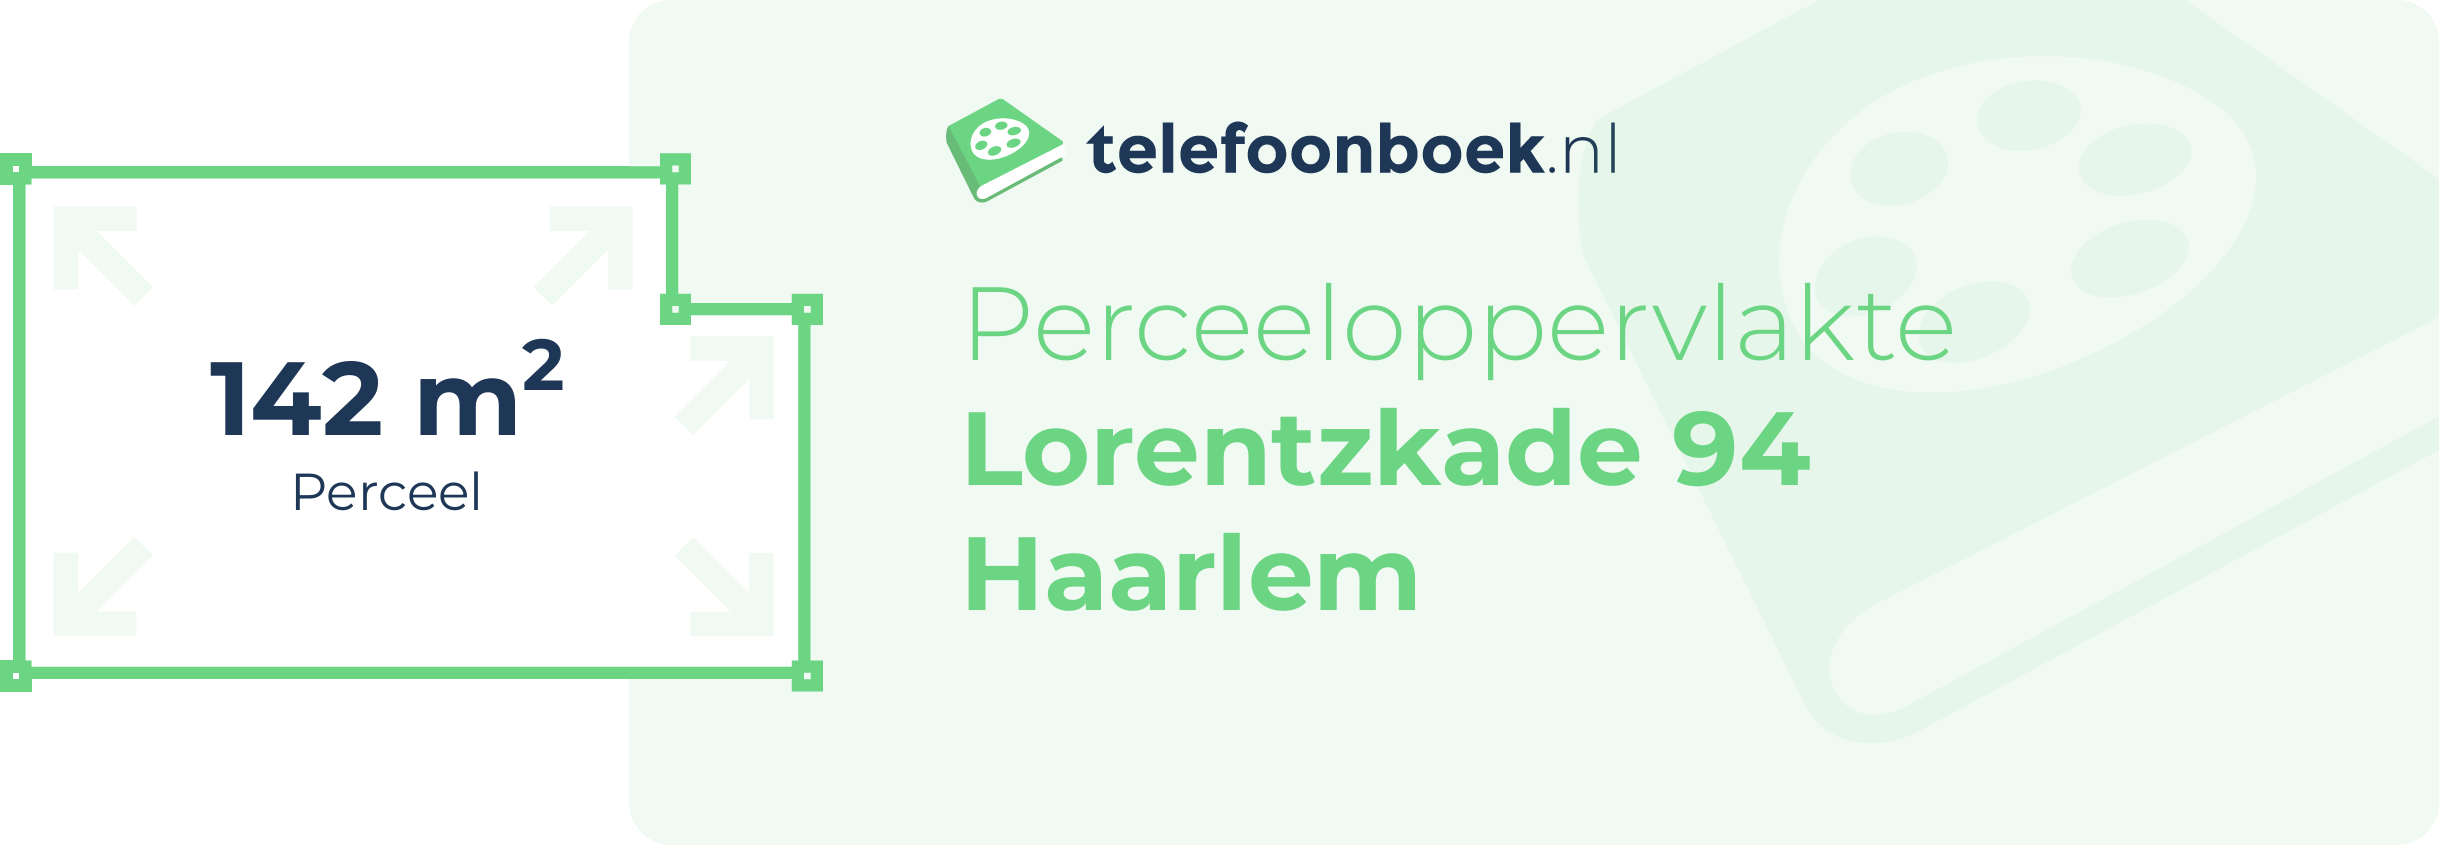 Perceeloppervlakte Lorentzkade 94 Haarlem